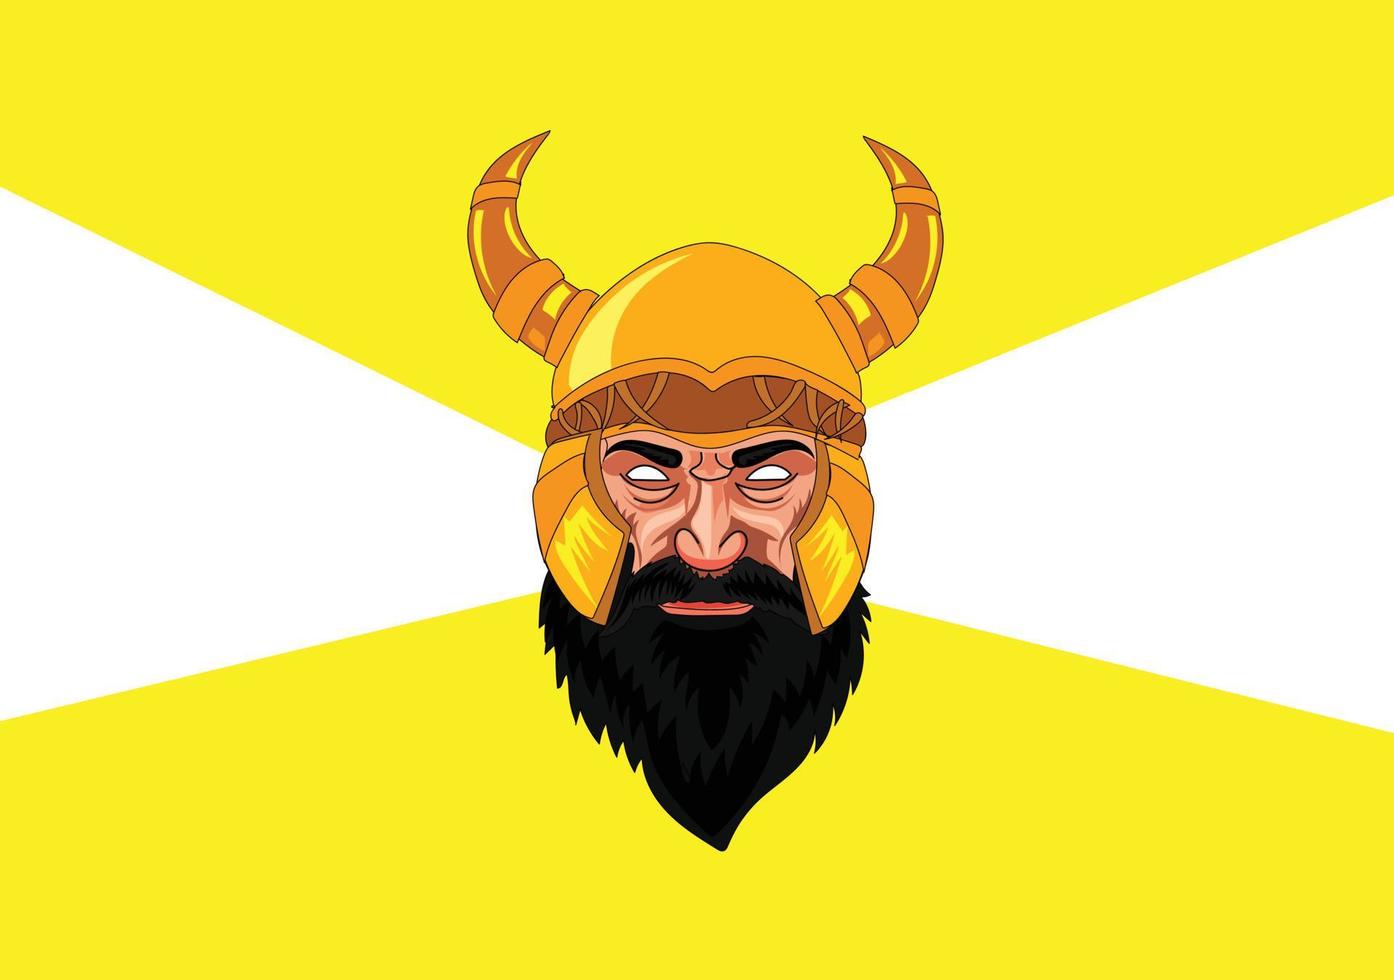 Vector de stock de mascota de guerrero vikingo. ilustración de macho